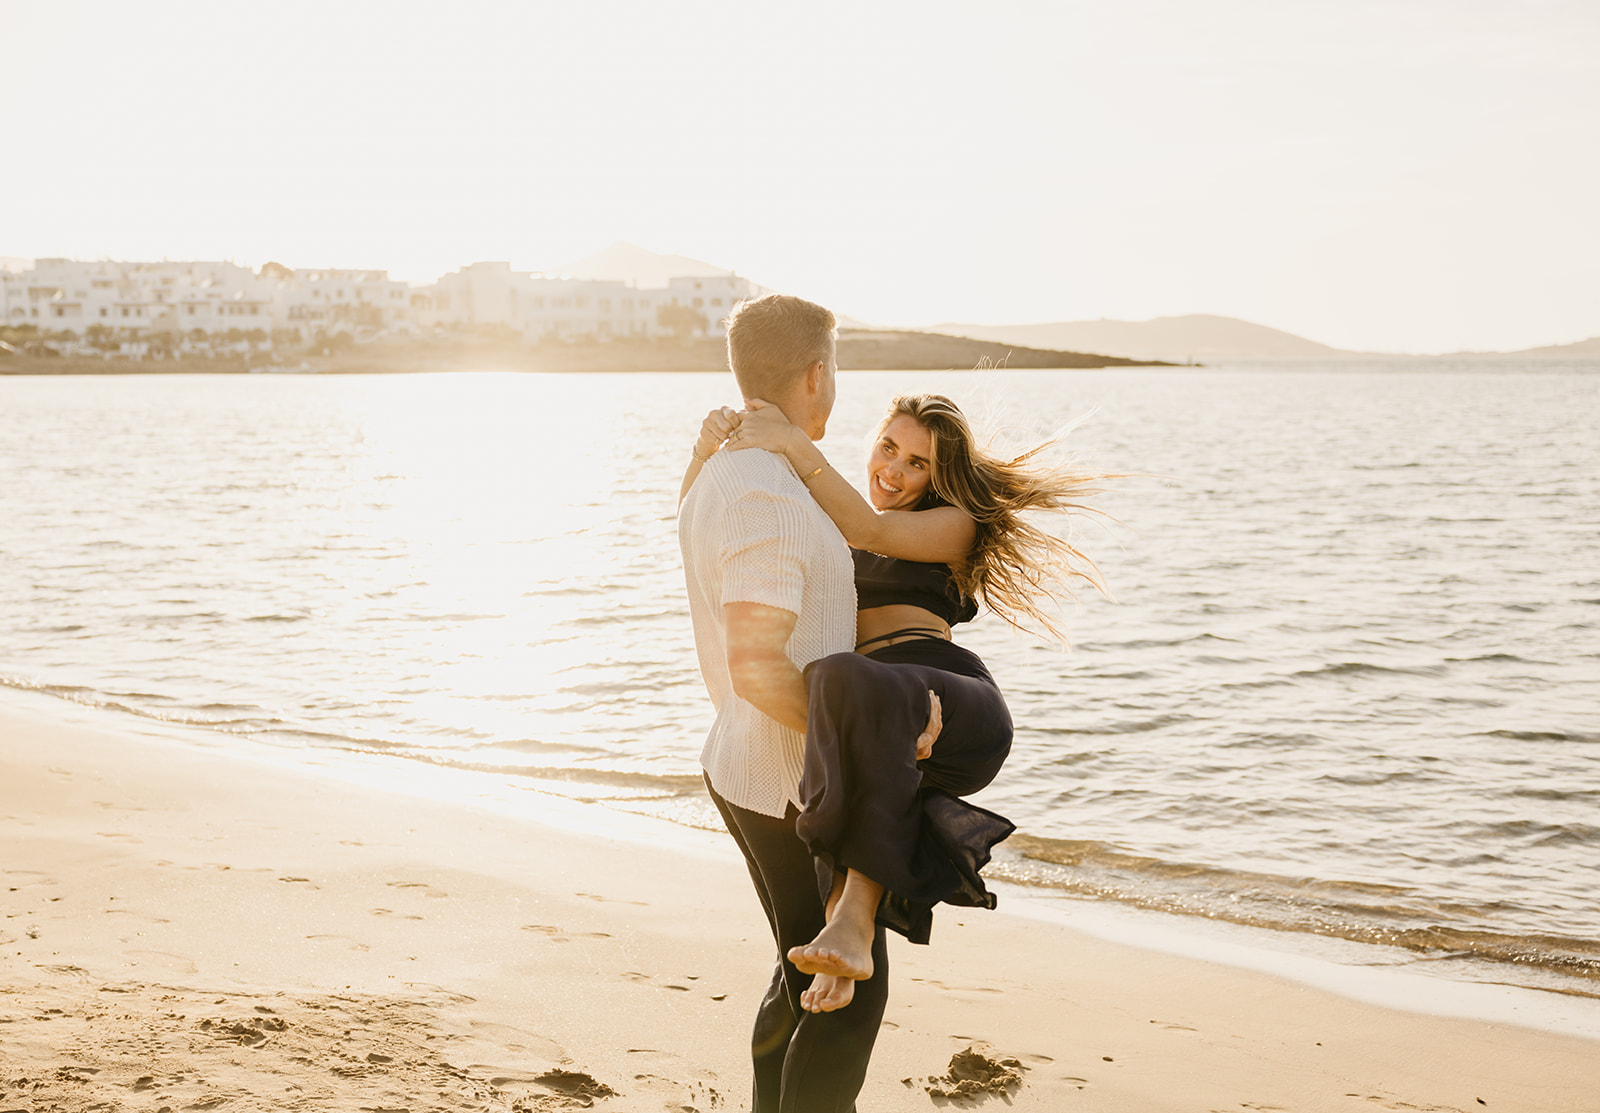 Dani Rawson Photography, a destination wedding photographer, shares photos from a honeymoon in Paros Greece 